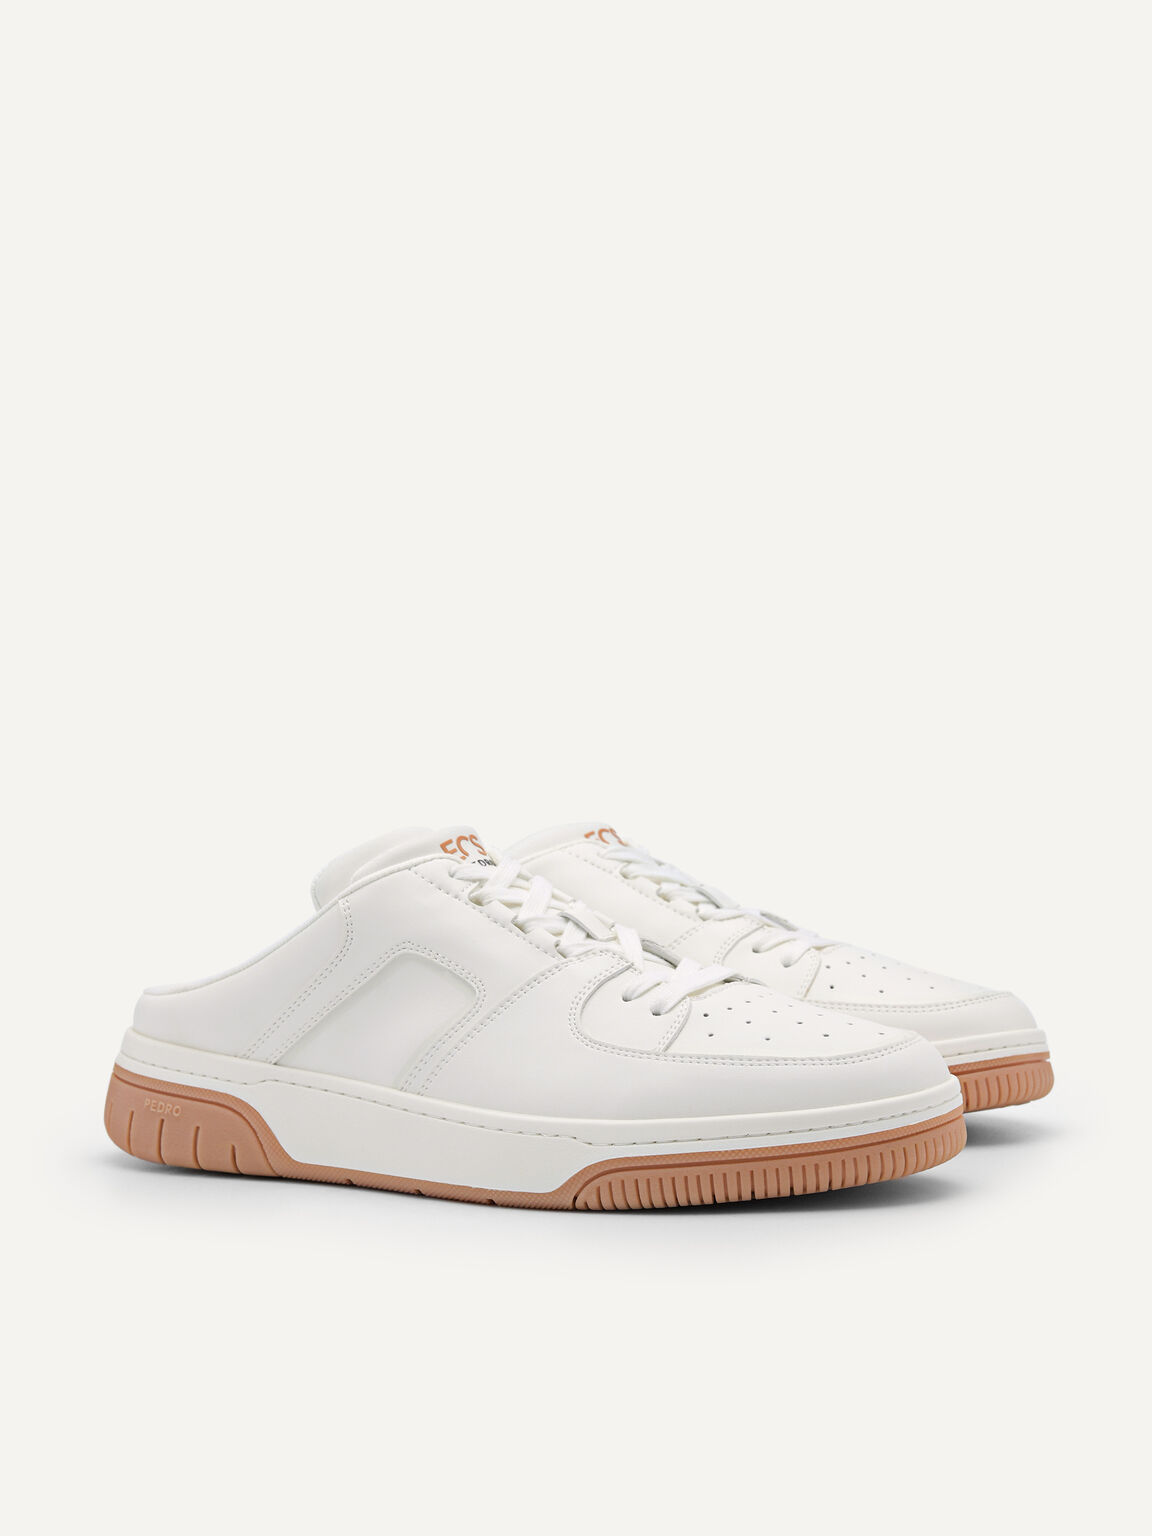 Men's EOS Slip-On Sneakers, White